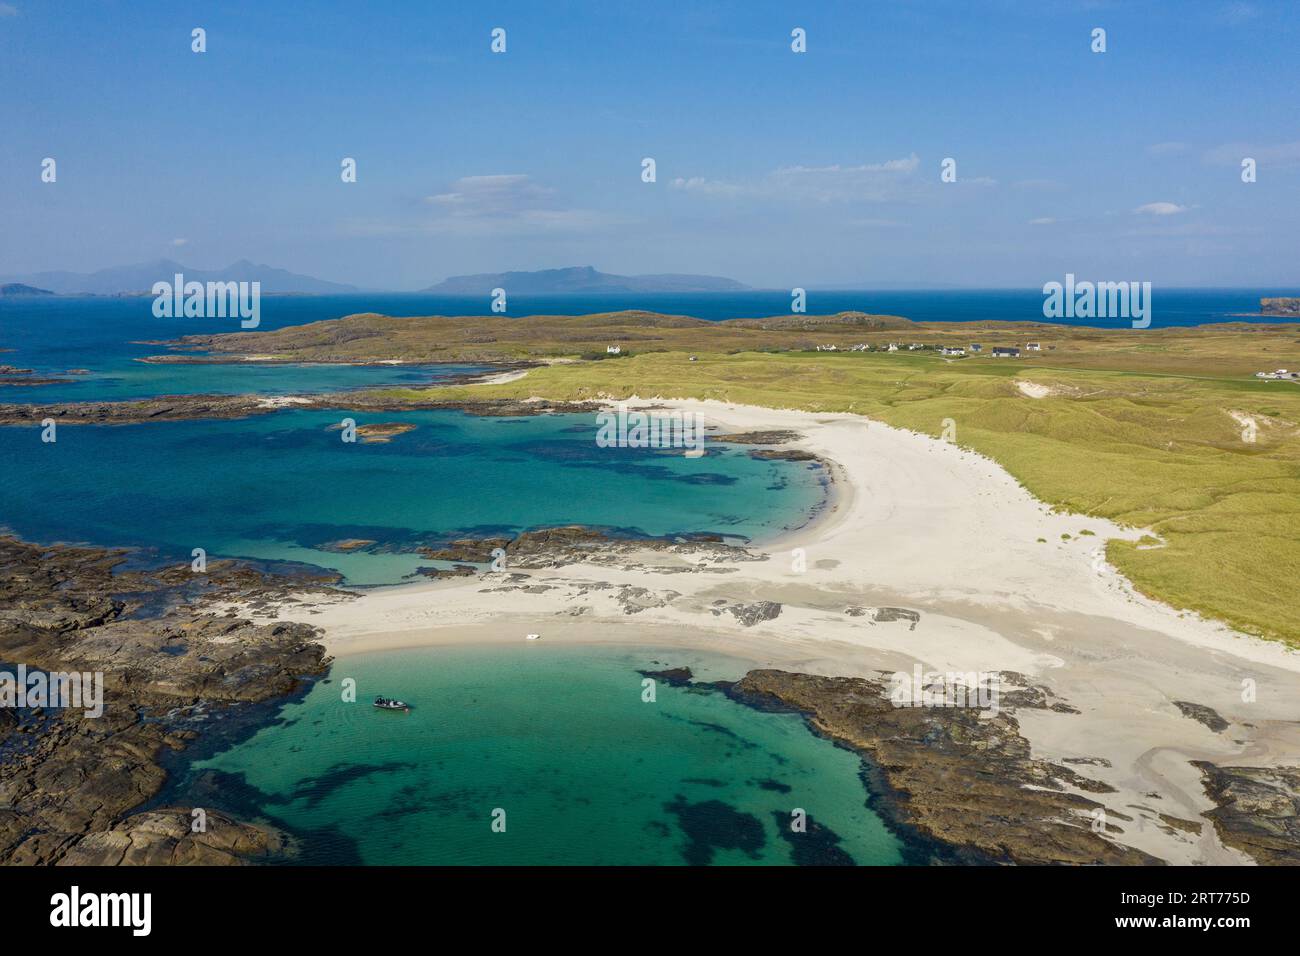 The white sandy beaches and turquoise waters of Sanna Bay, Ardnamurchan Peninsula, Scotland, UK Stock Photo